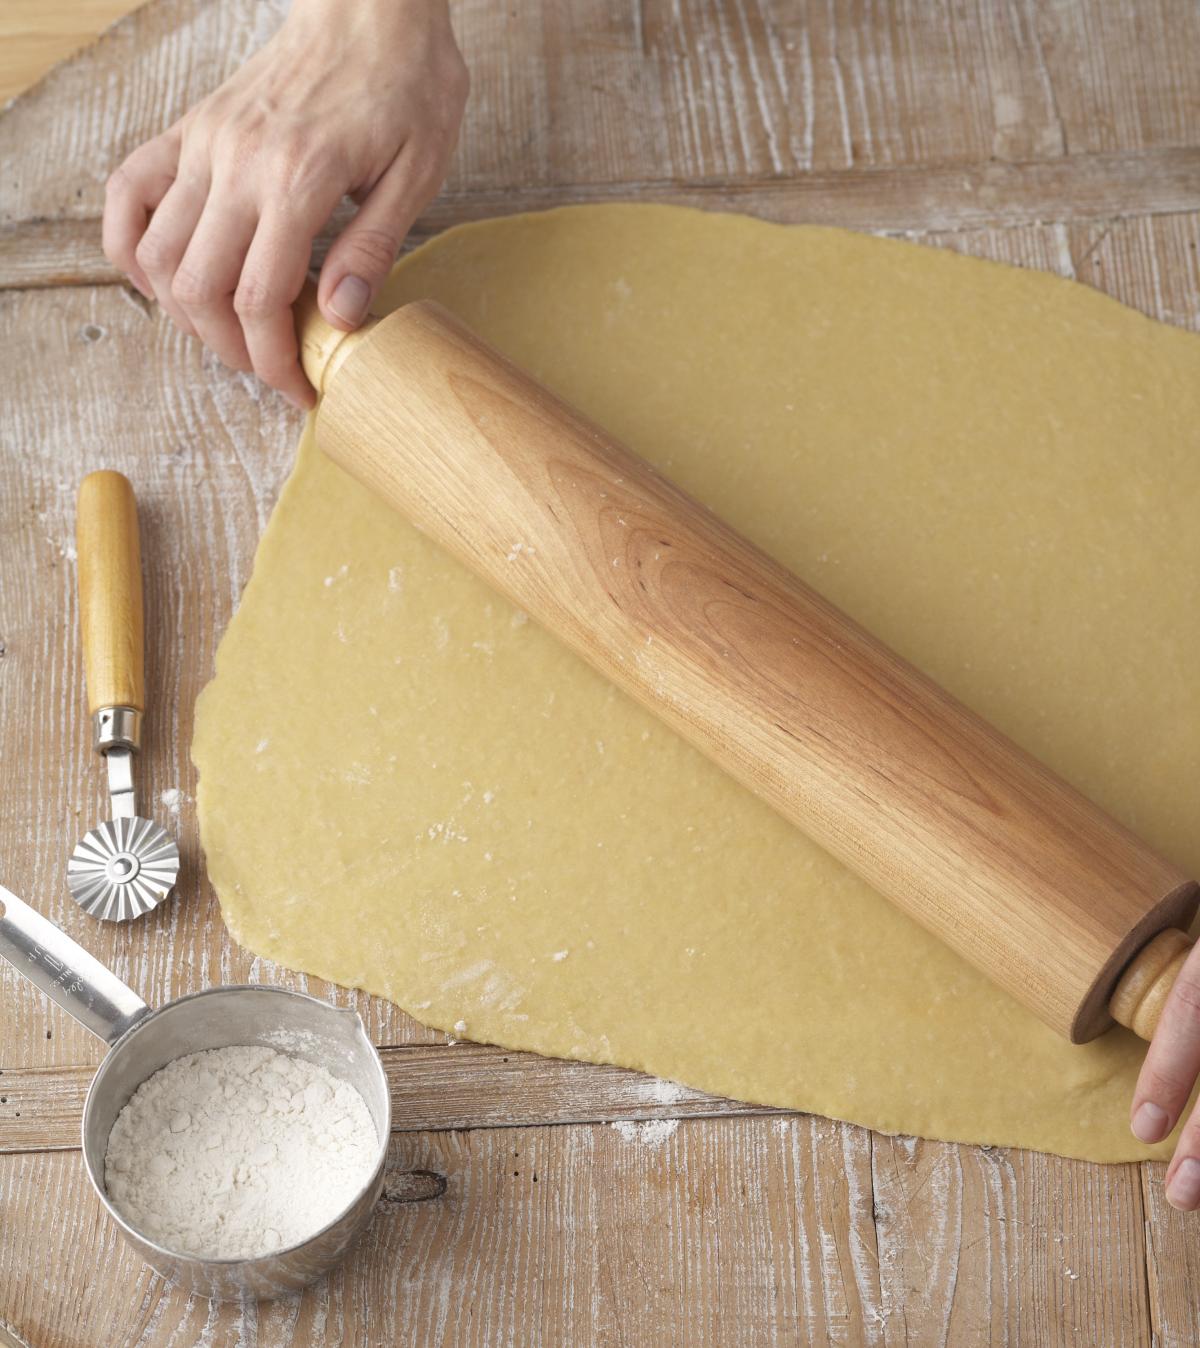 How to Make Homemade Ravioli | Allrecipes